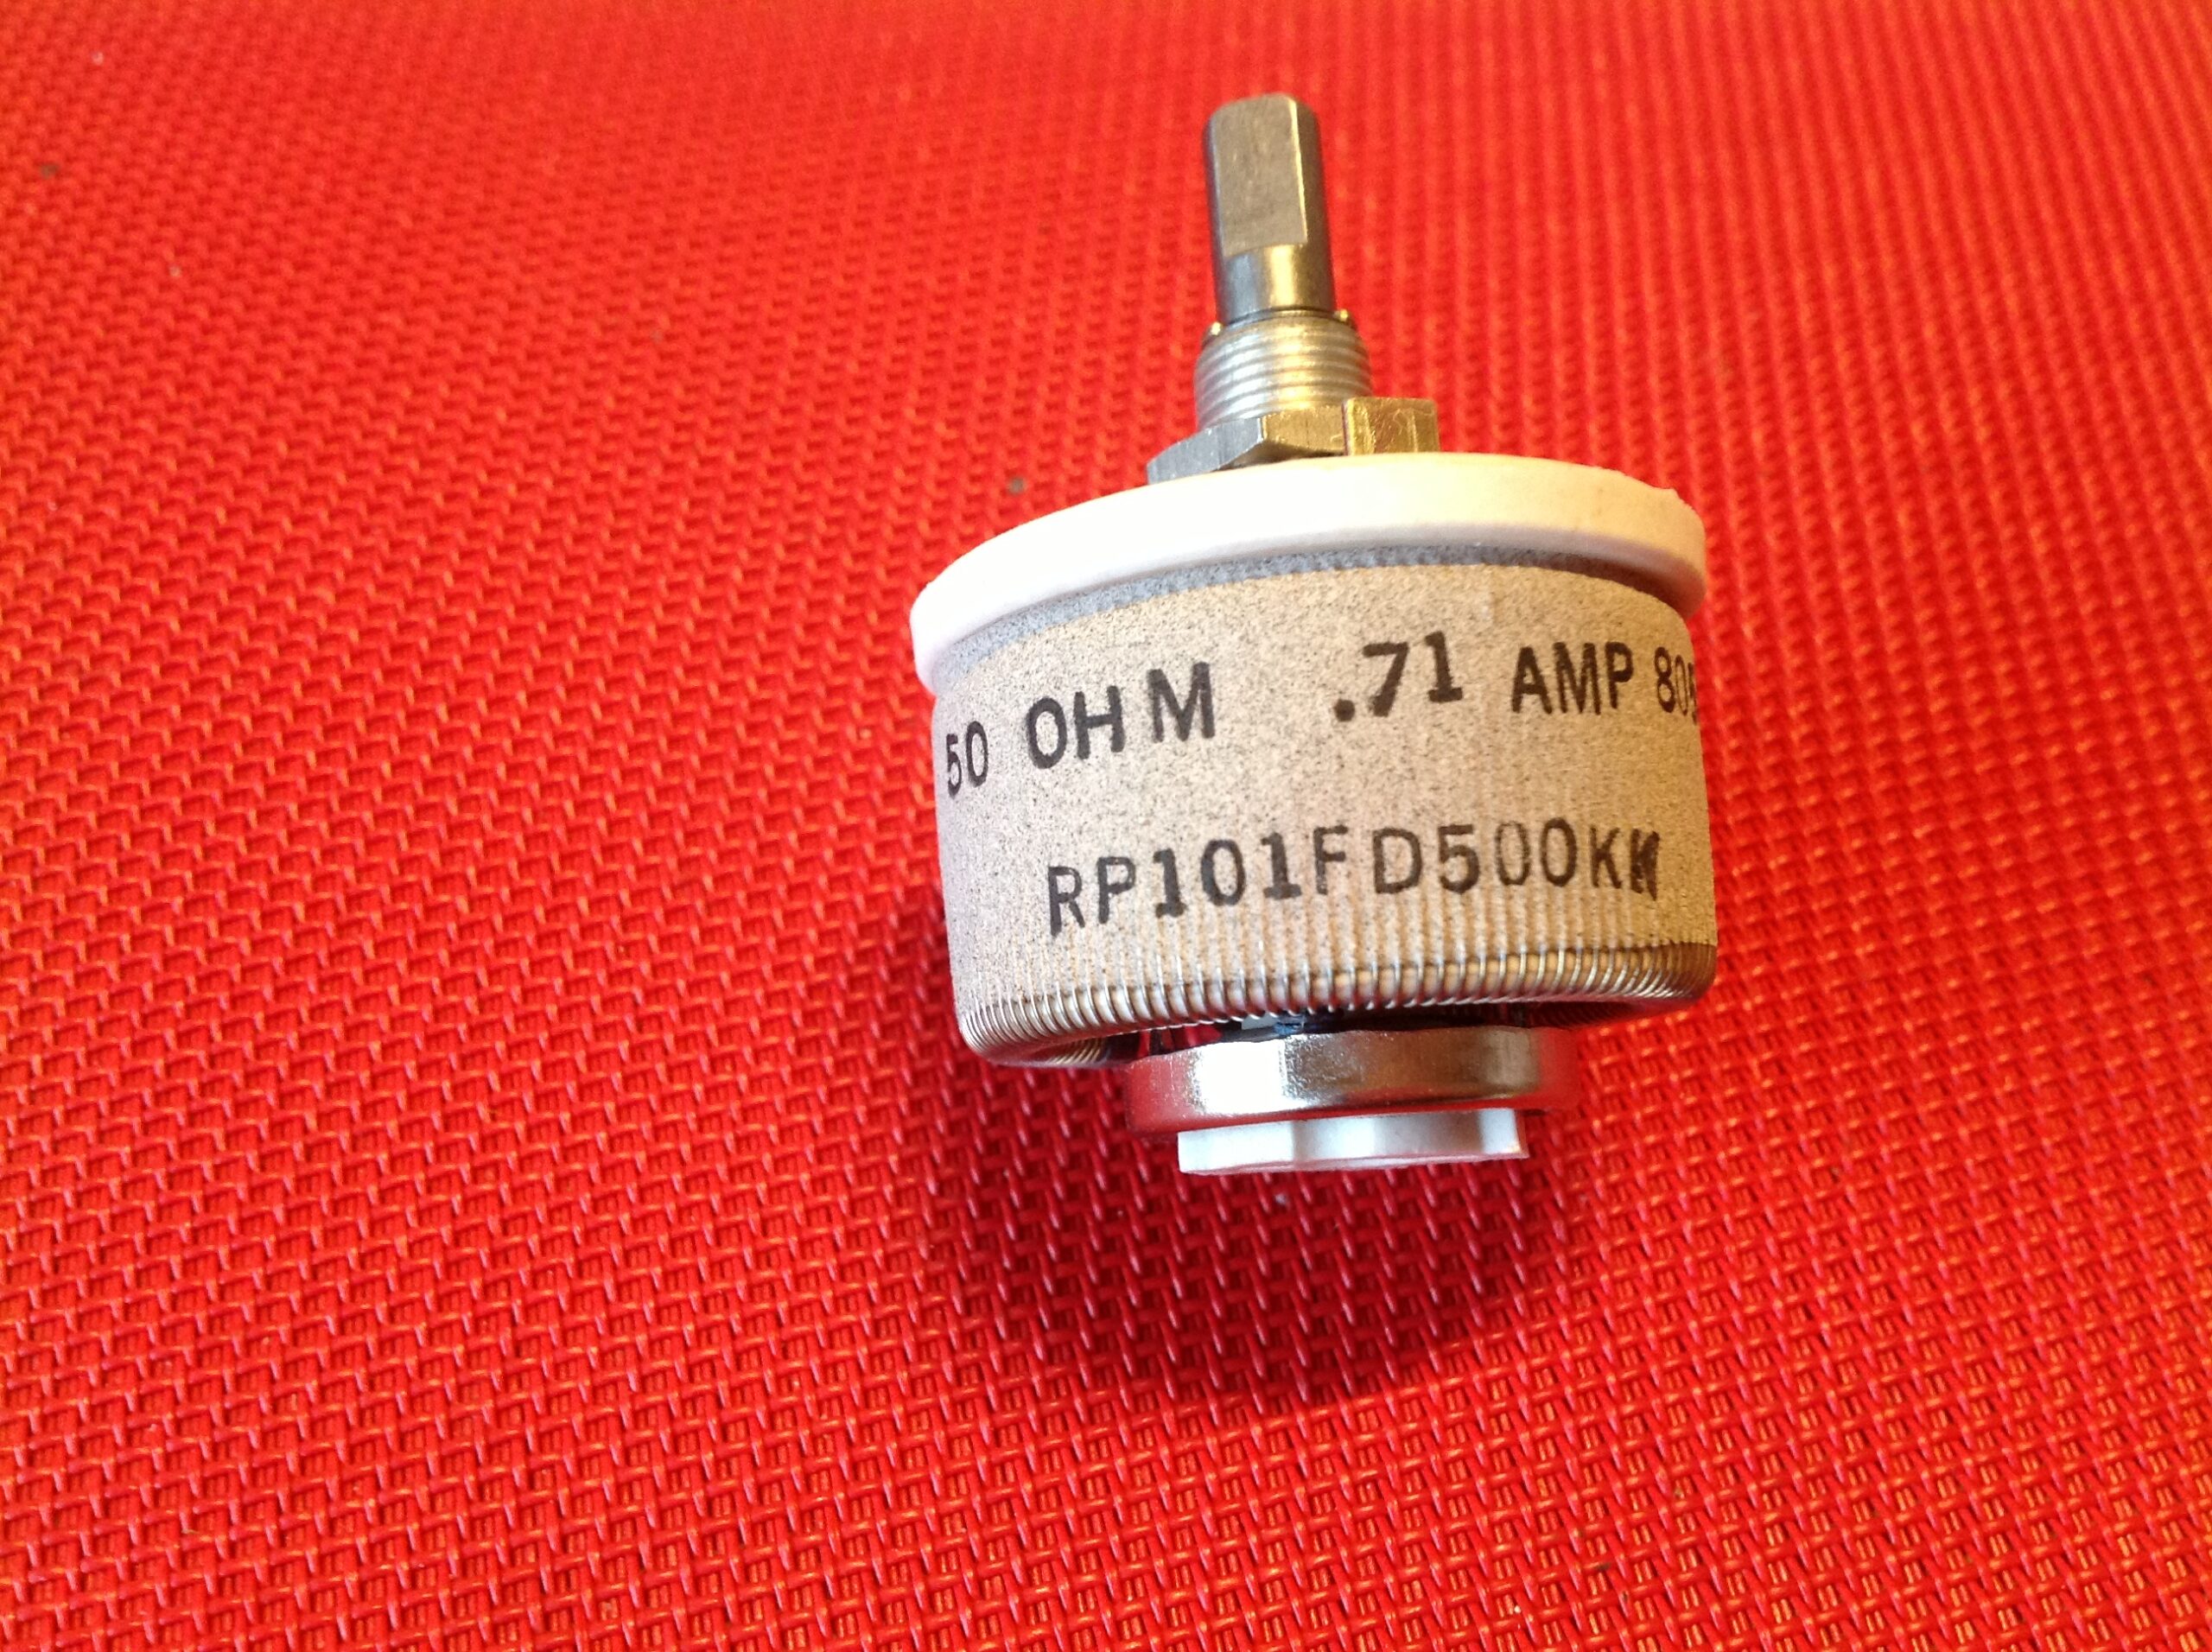 Resistor, Potentiometer MIL Type RP101FD500KK, 50 Ohm - 71 AMP 8052